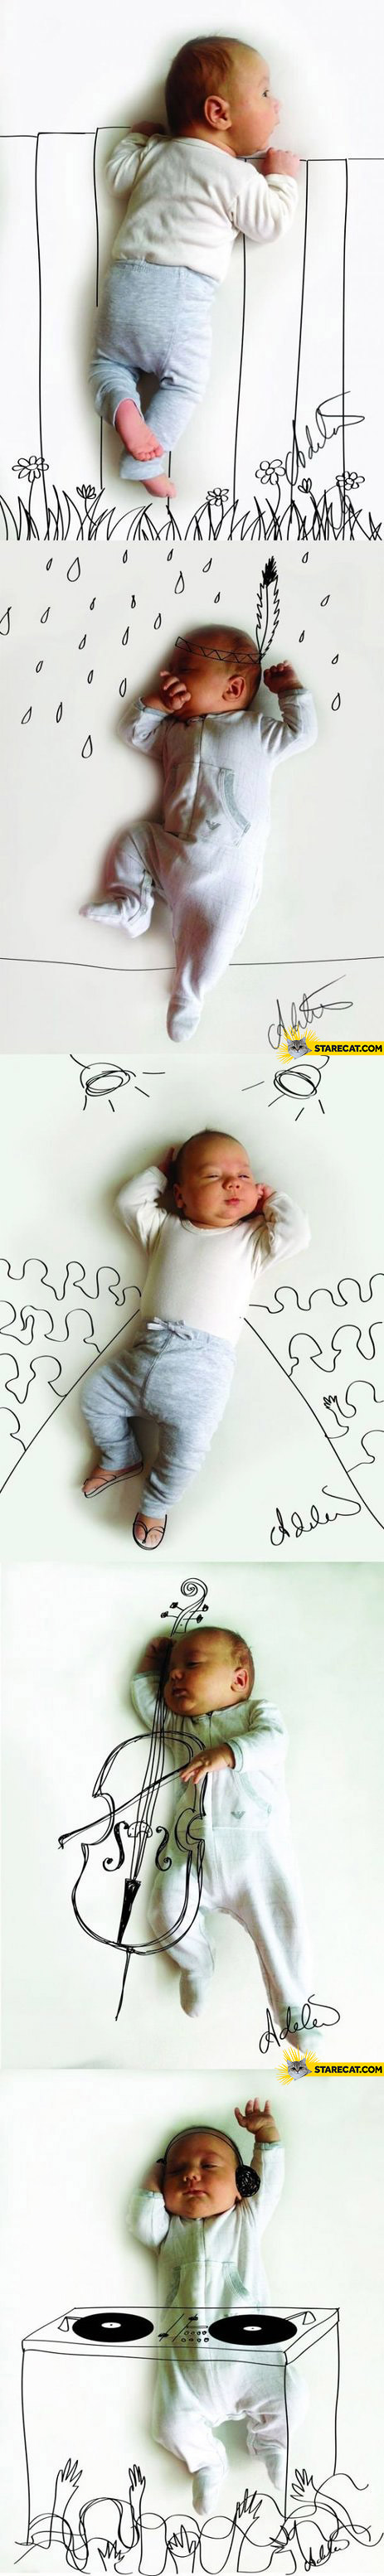 Creative baby photos illustrations